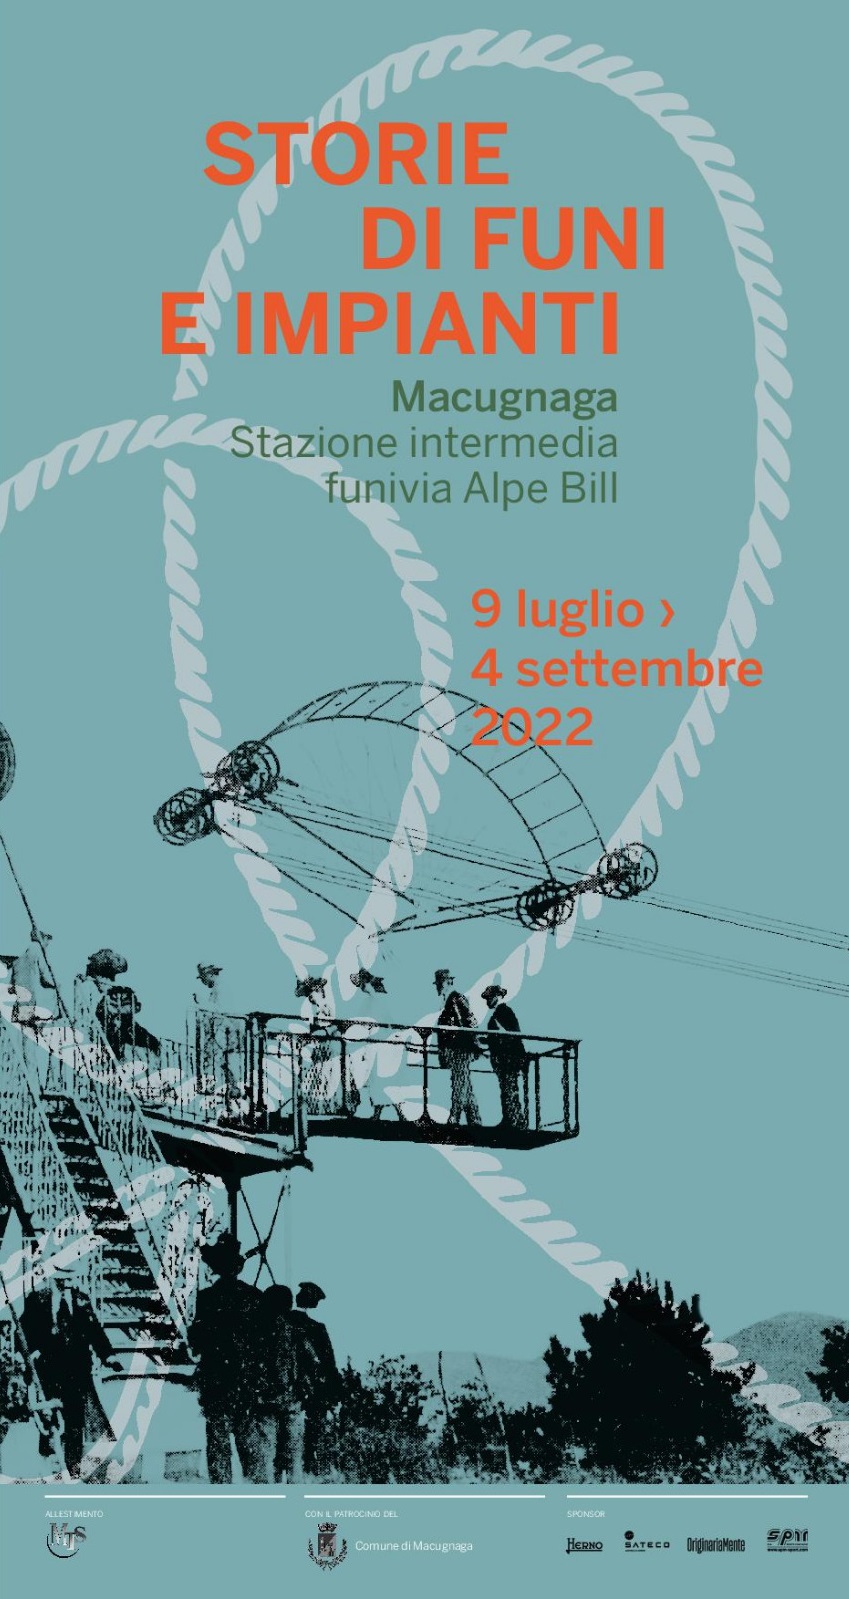 Storie di funi e di impianti in una mostra a Macugnaga dal 9 luglio al 4 settembre 2022